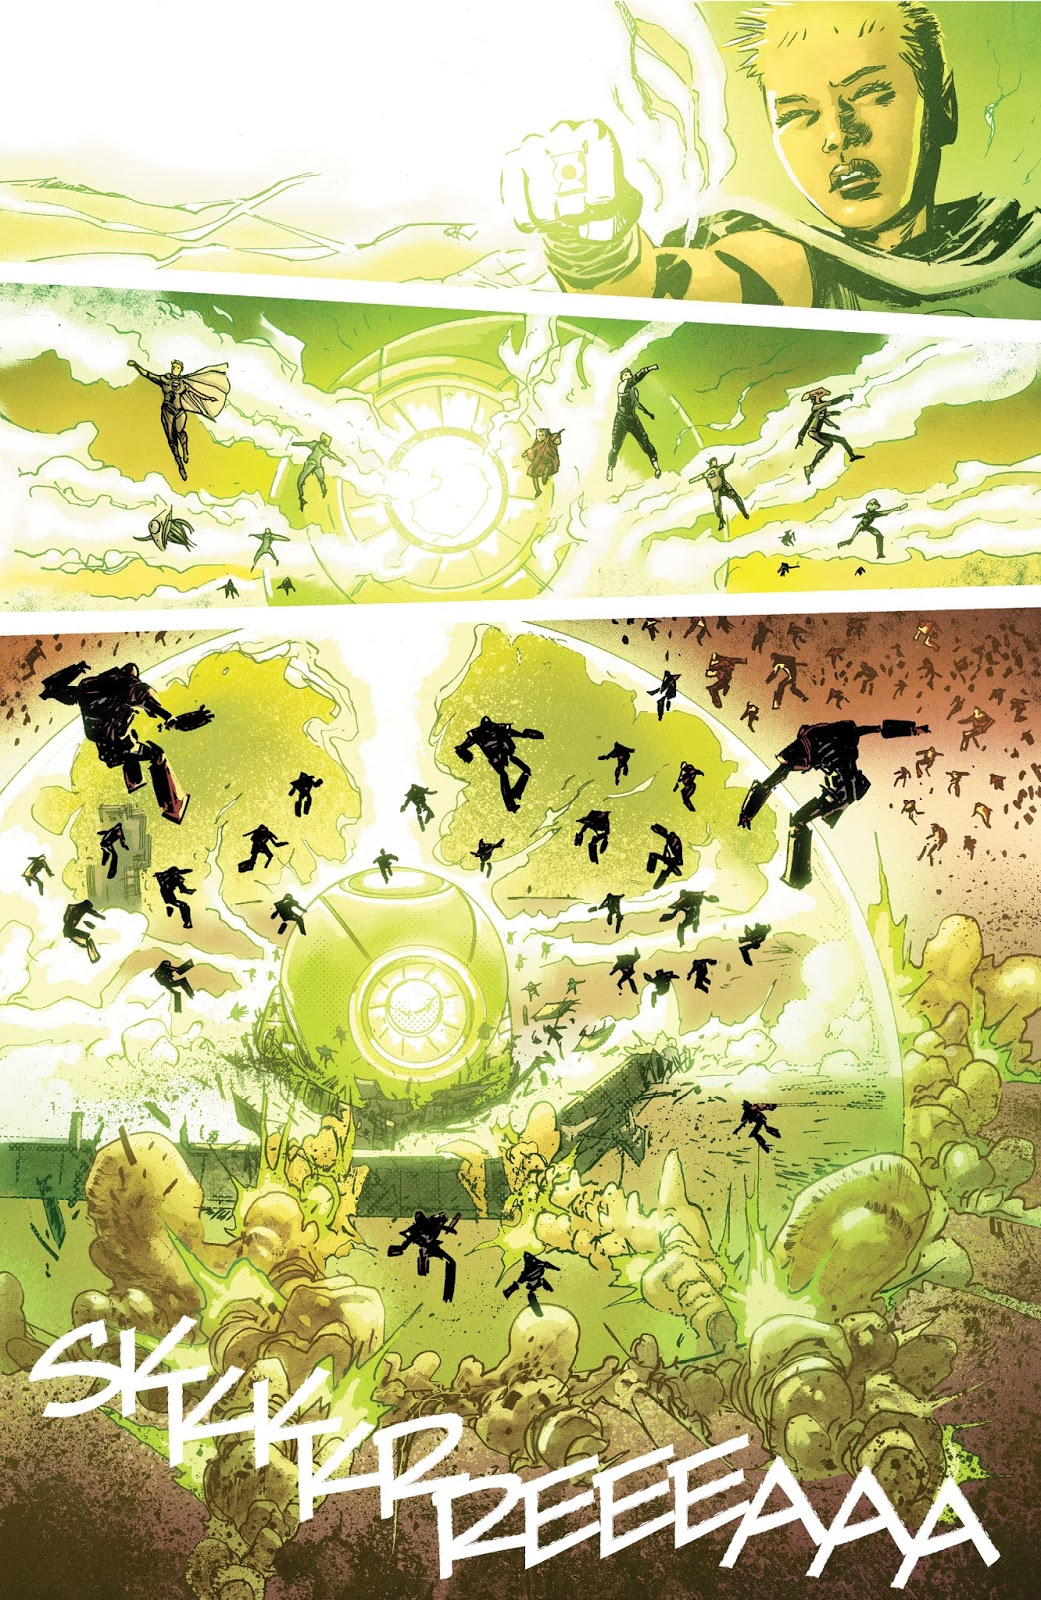 Green-Lantern-Corps-VS-Manhunters-Earth-1